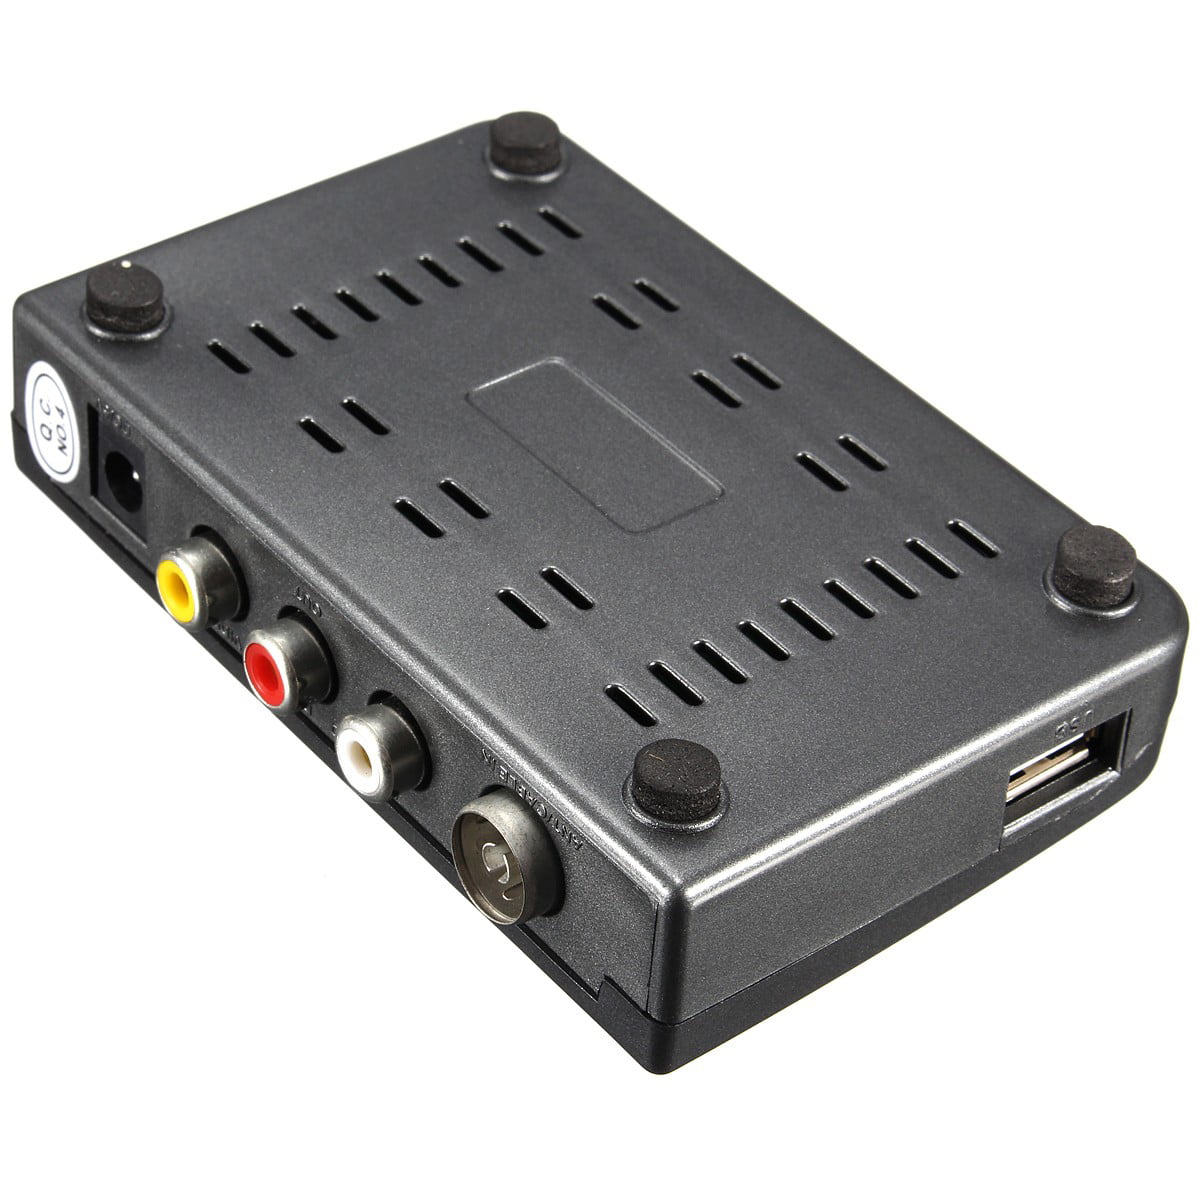 XuBa RF to AV Analog TV Receiver Converter Modulator Power Adapter USB with Video UK Plug 